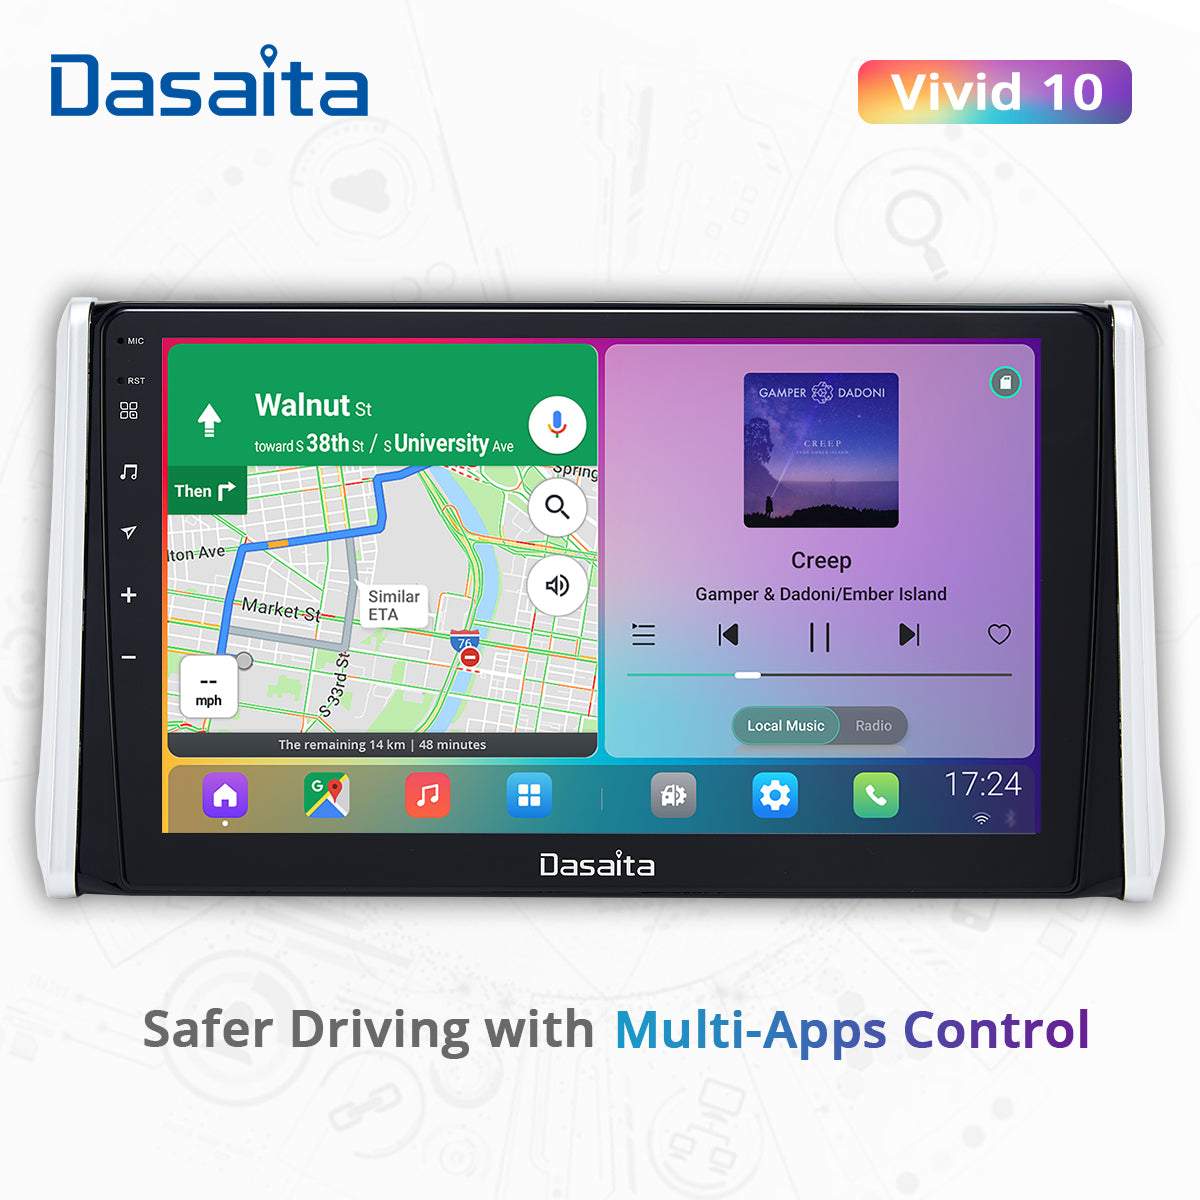 Dasaita Vivid11 Toyota RAV4 2019 2020 2021 Car Stereo 10.2 Inch Carplay Android Auto PX6 4G+64G Android11 1280*720 DSP AHD Radio